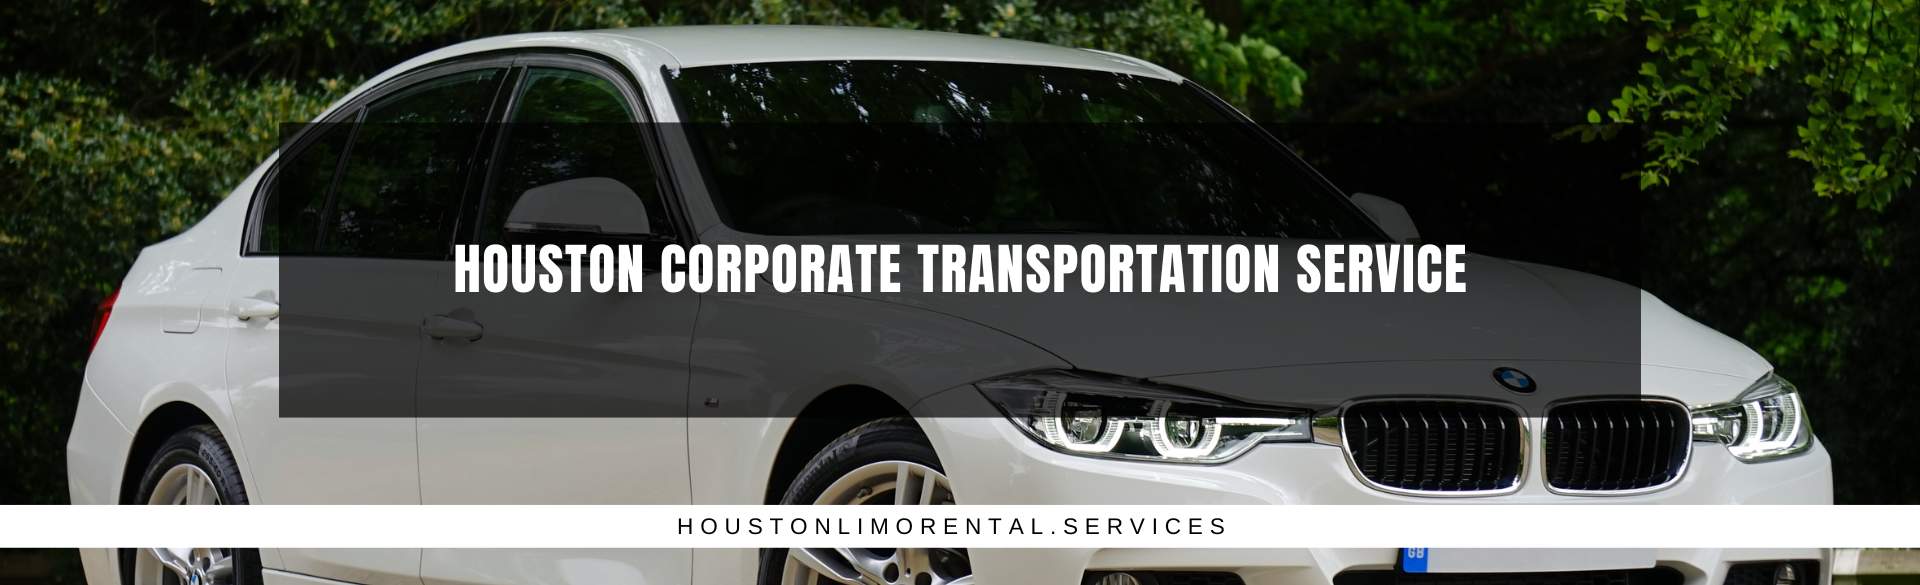 Houston Corporate Transportation Service